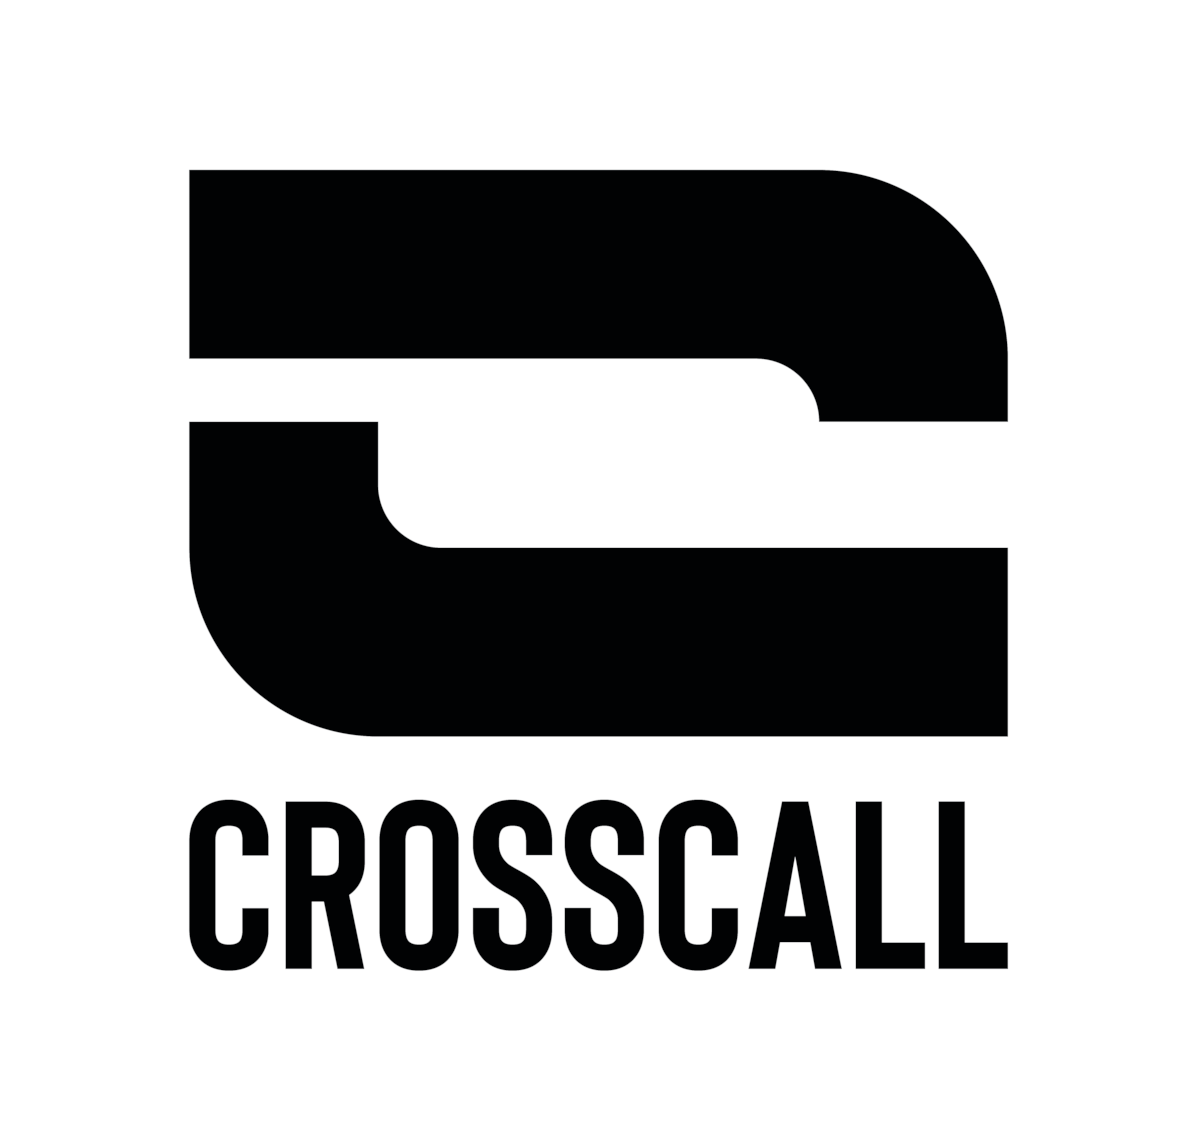 Visit Crosscall